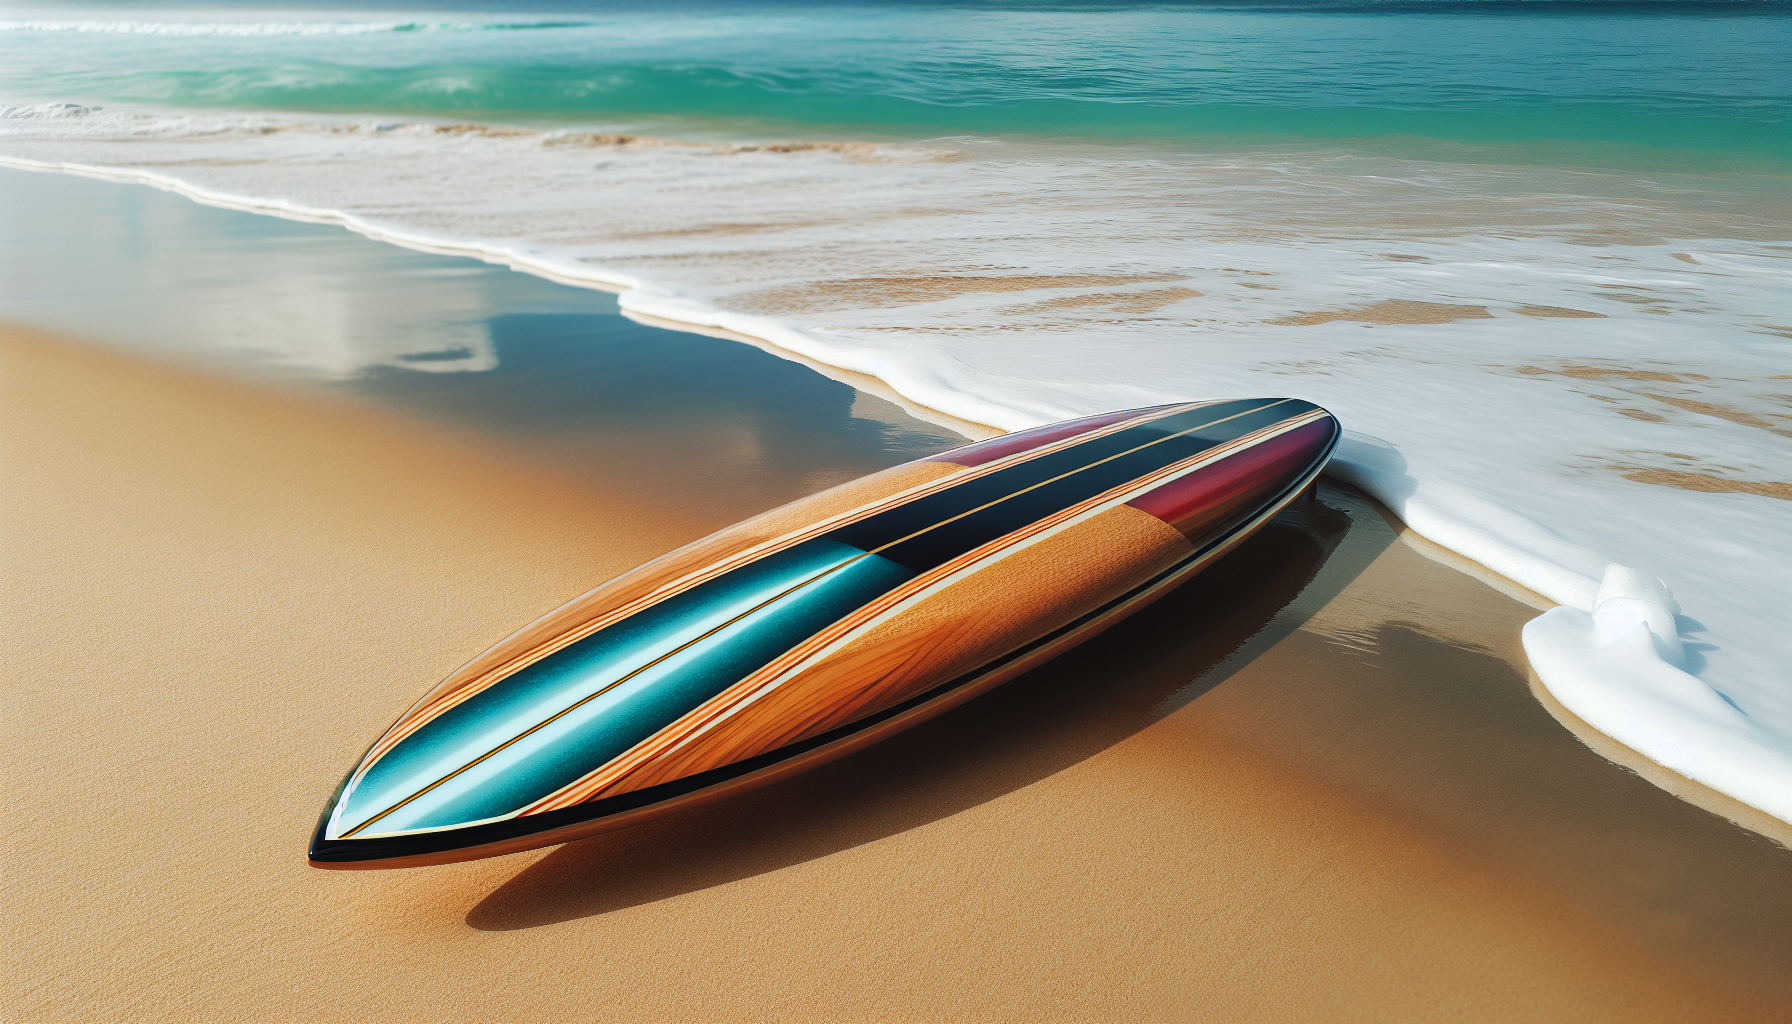 Wide and stable beginner longboard surfboard